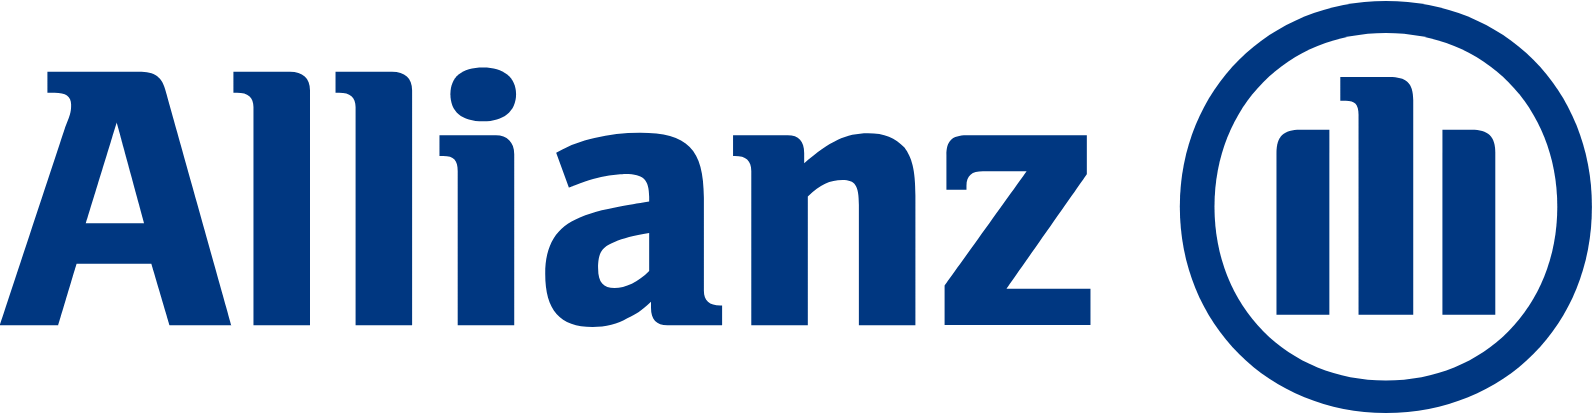 Allianz logo large (transparent PNG)